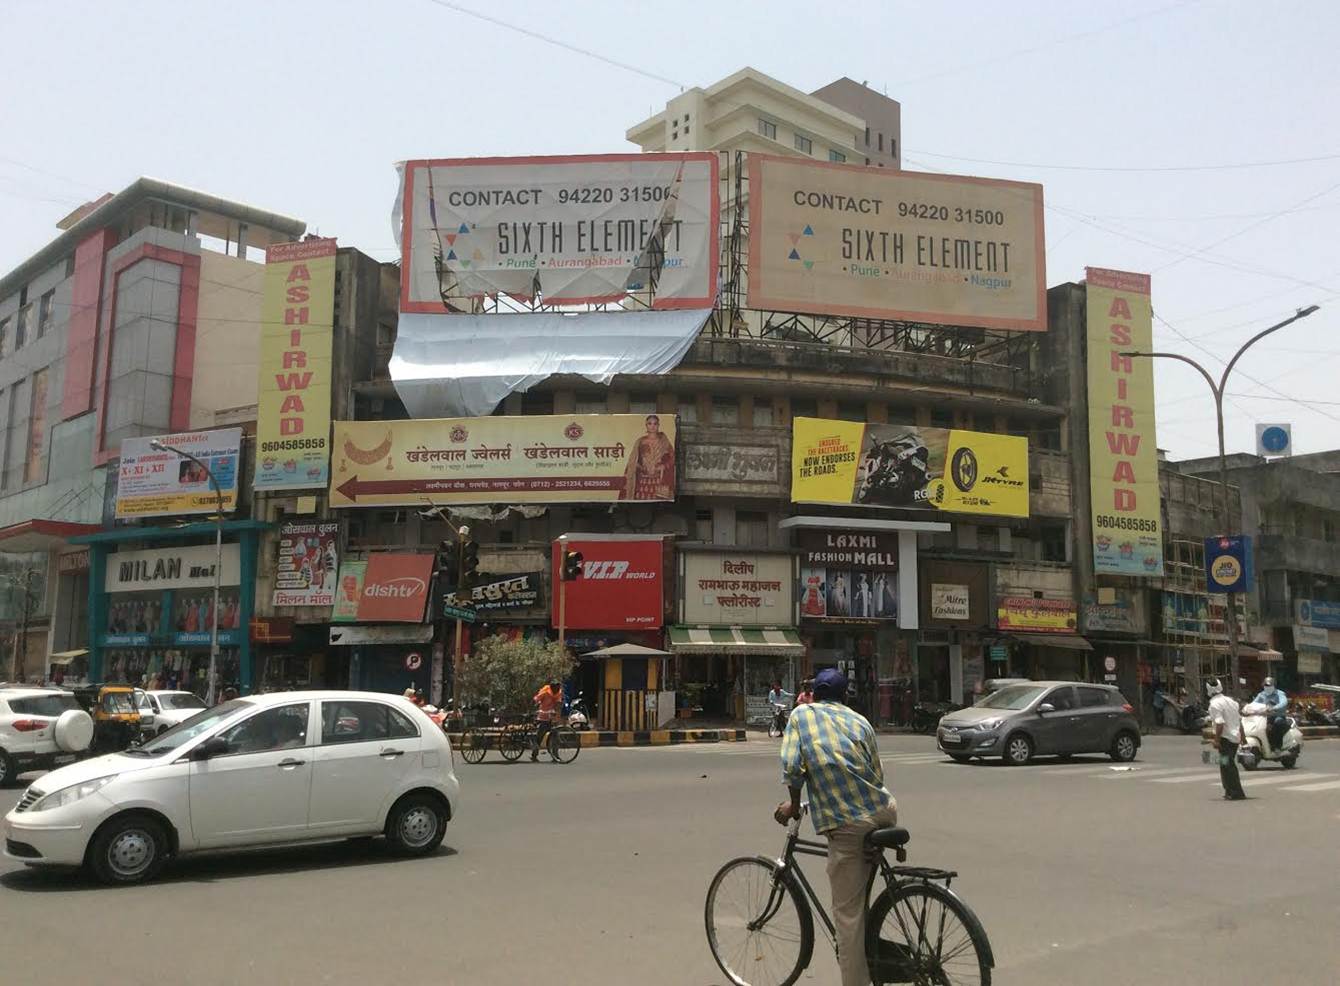 Laxmi Bhuvan Whc Road Dharampeth, Nagpur